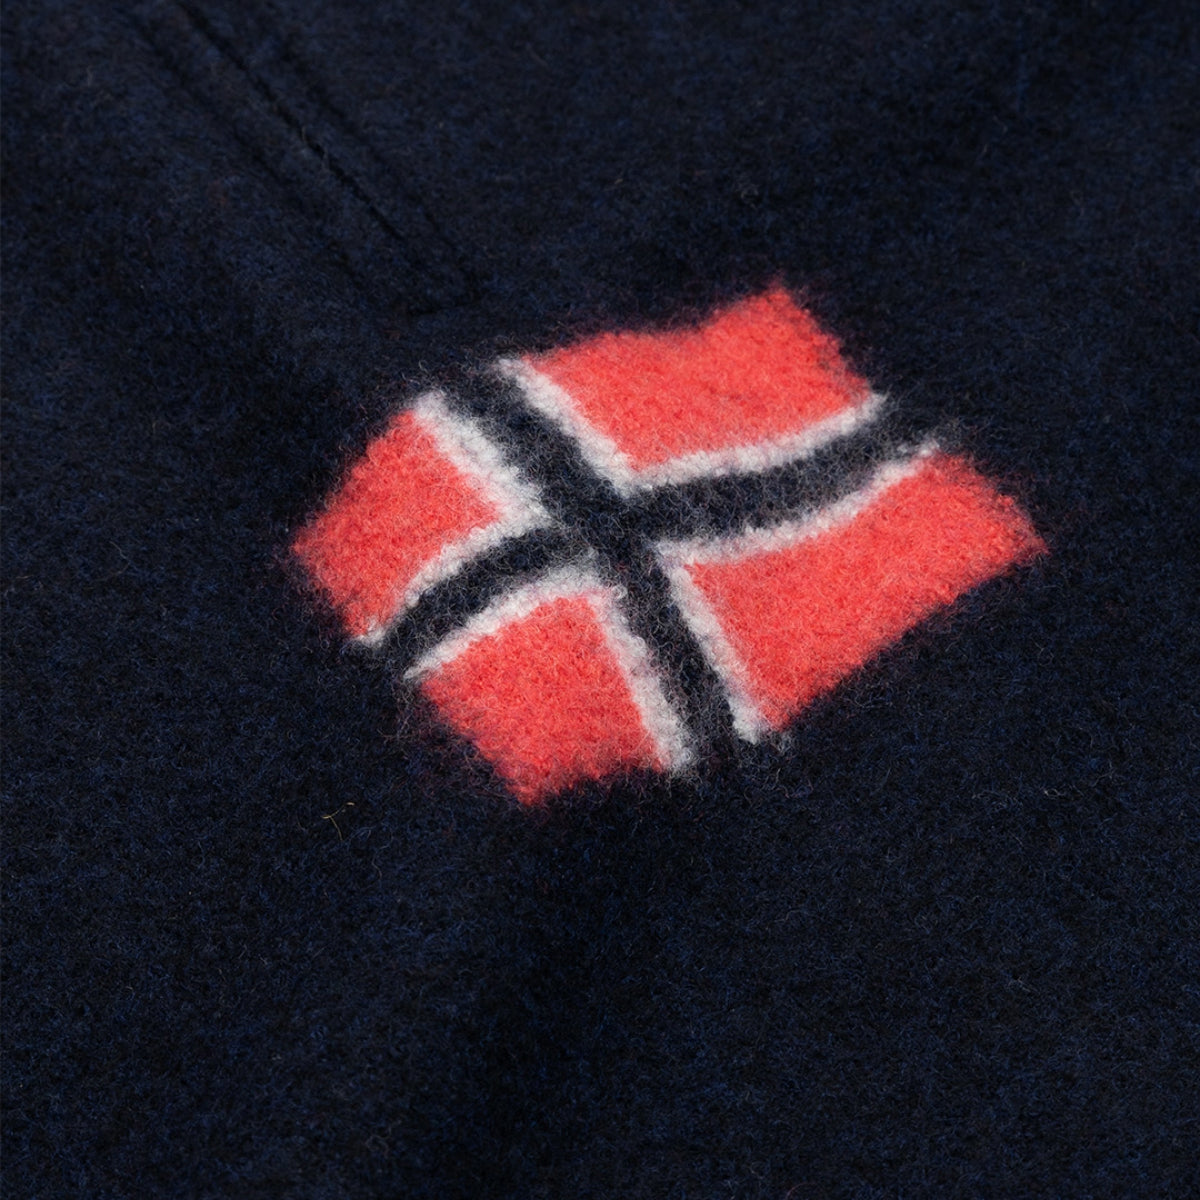 Amundsen Sports - Men's Boiled Ski Sweater (Flag) - Faded Navy / Norge